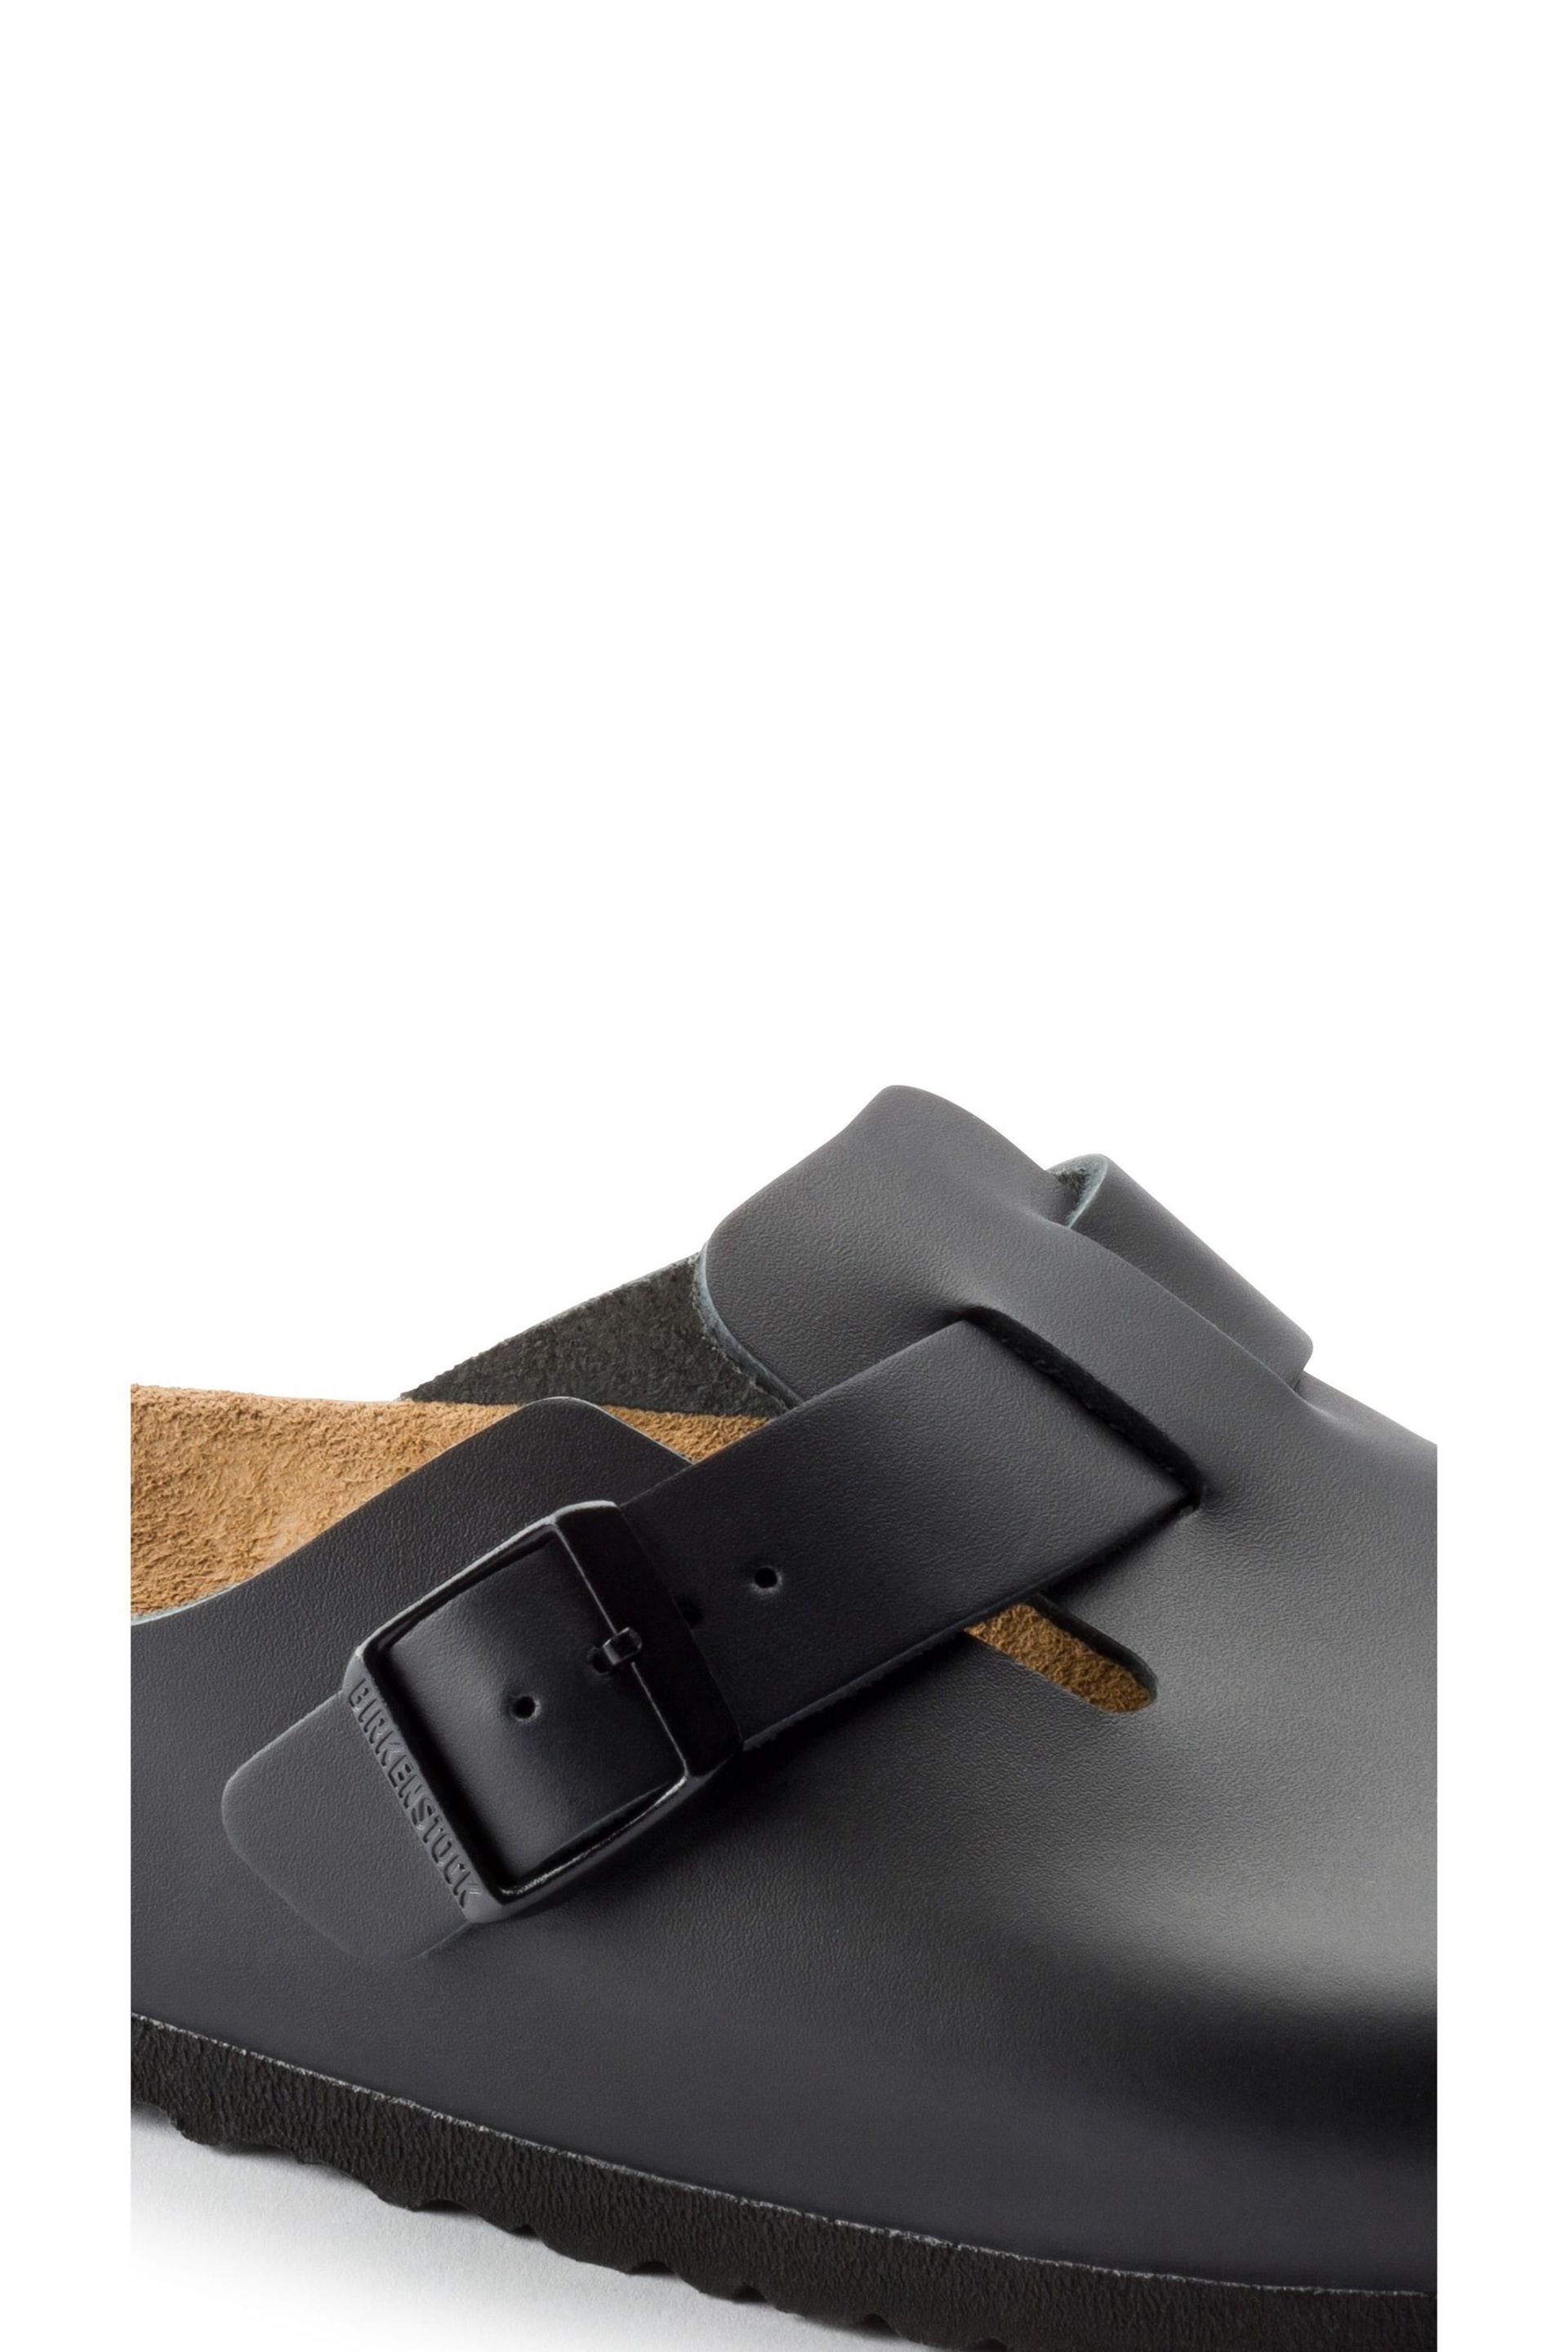 Birkenstock Smooth Leather Boston Black Clogs - Image 4 of 7